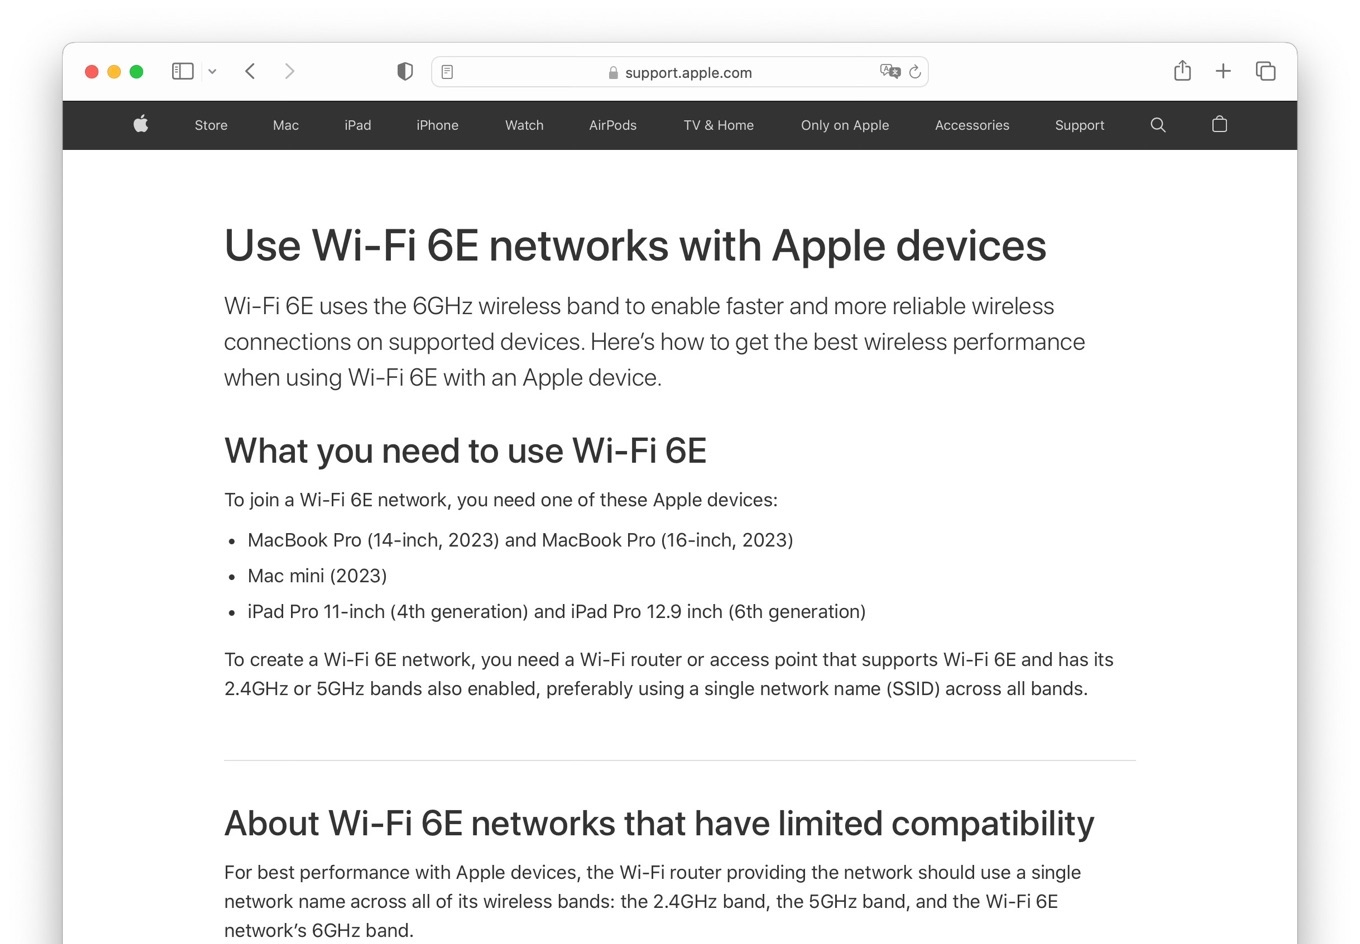 Use Wi-Fi 6E networks with MacBook Pro and Mac mini